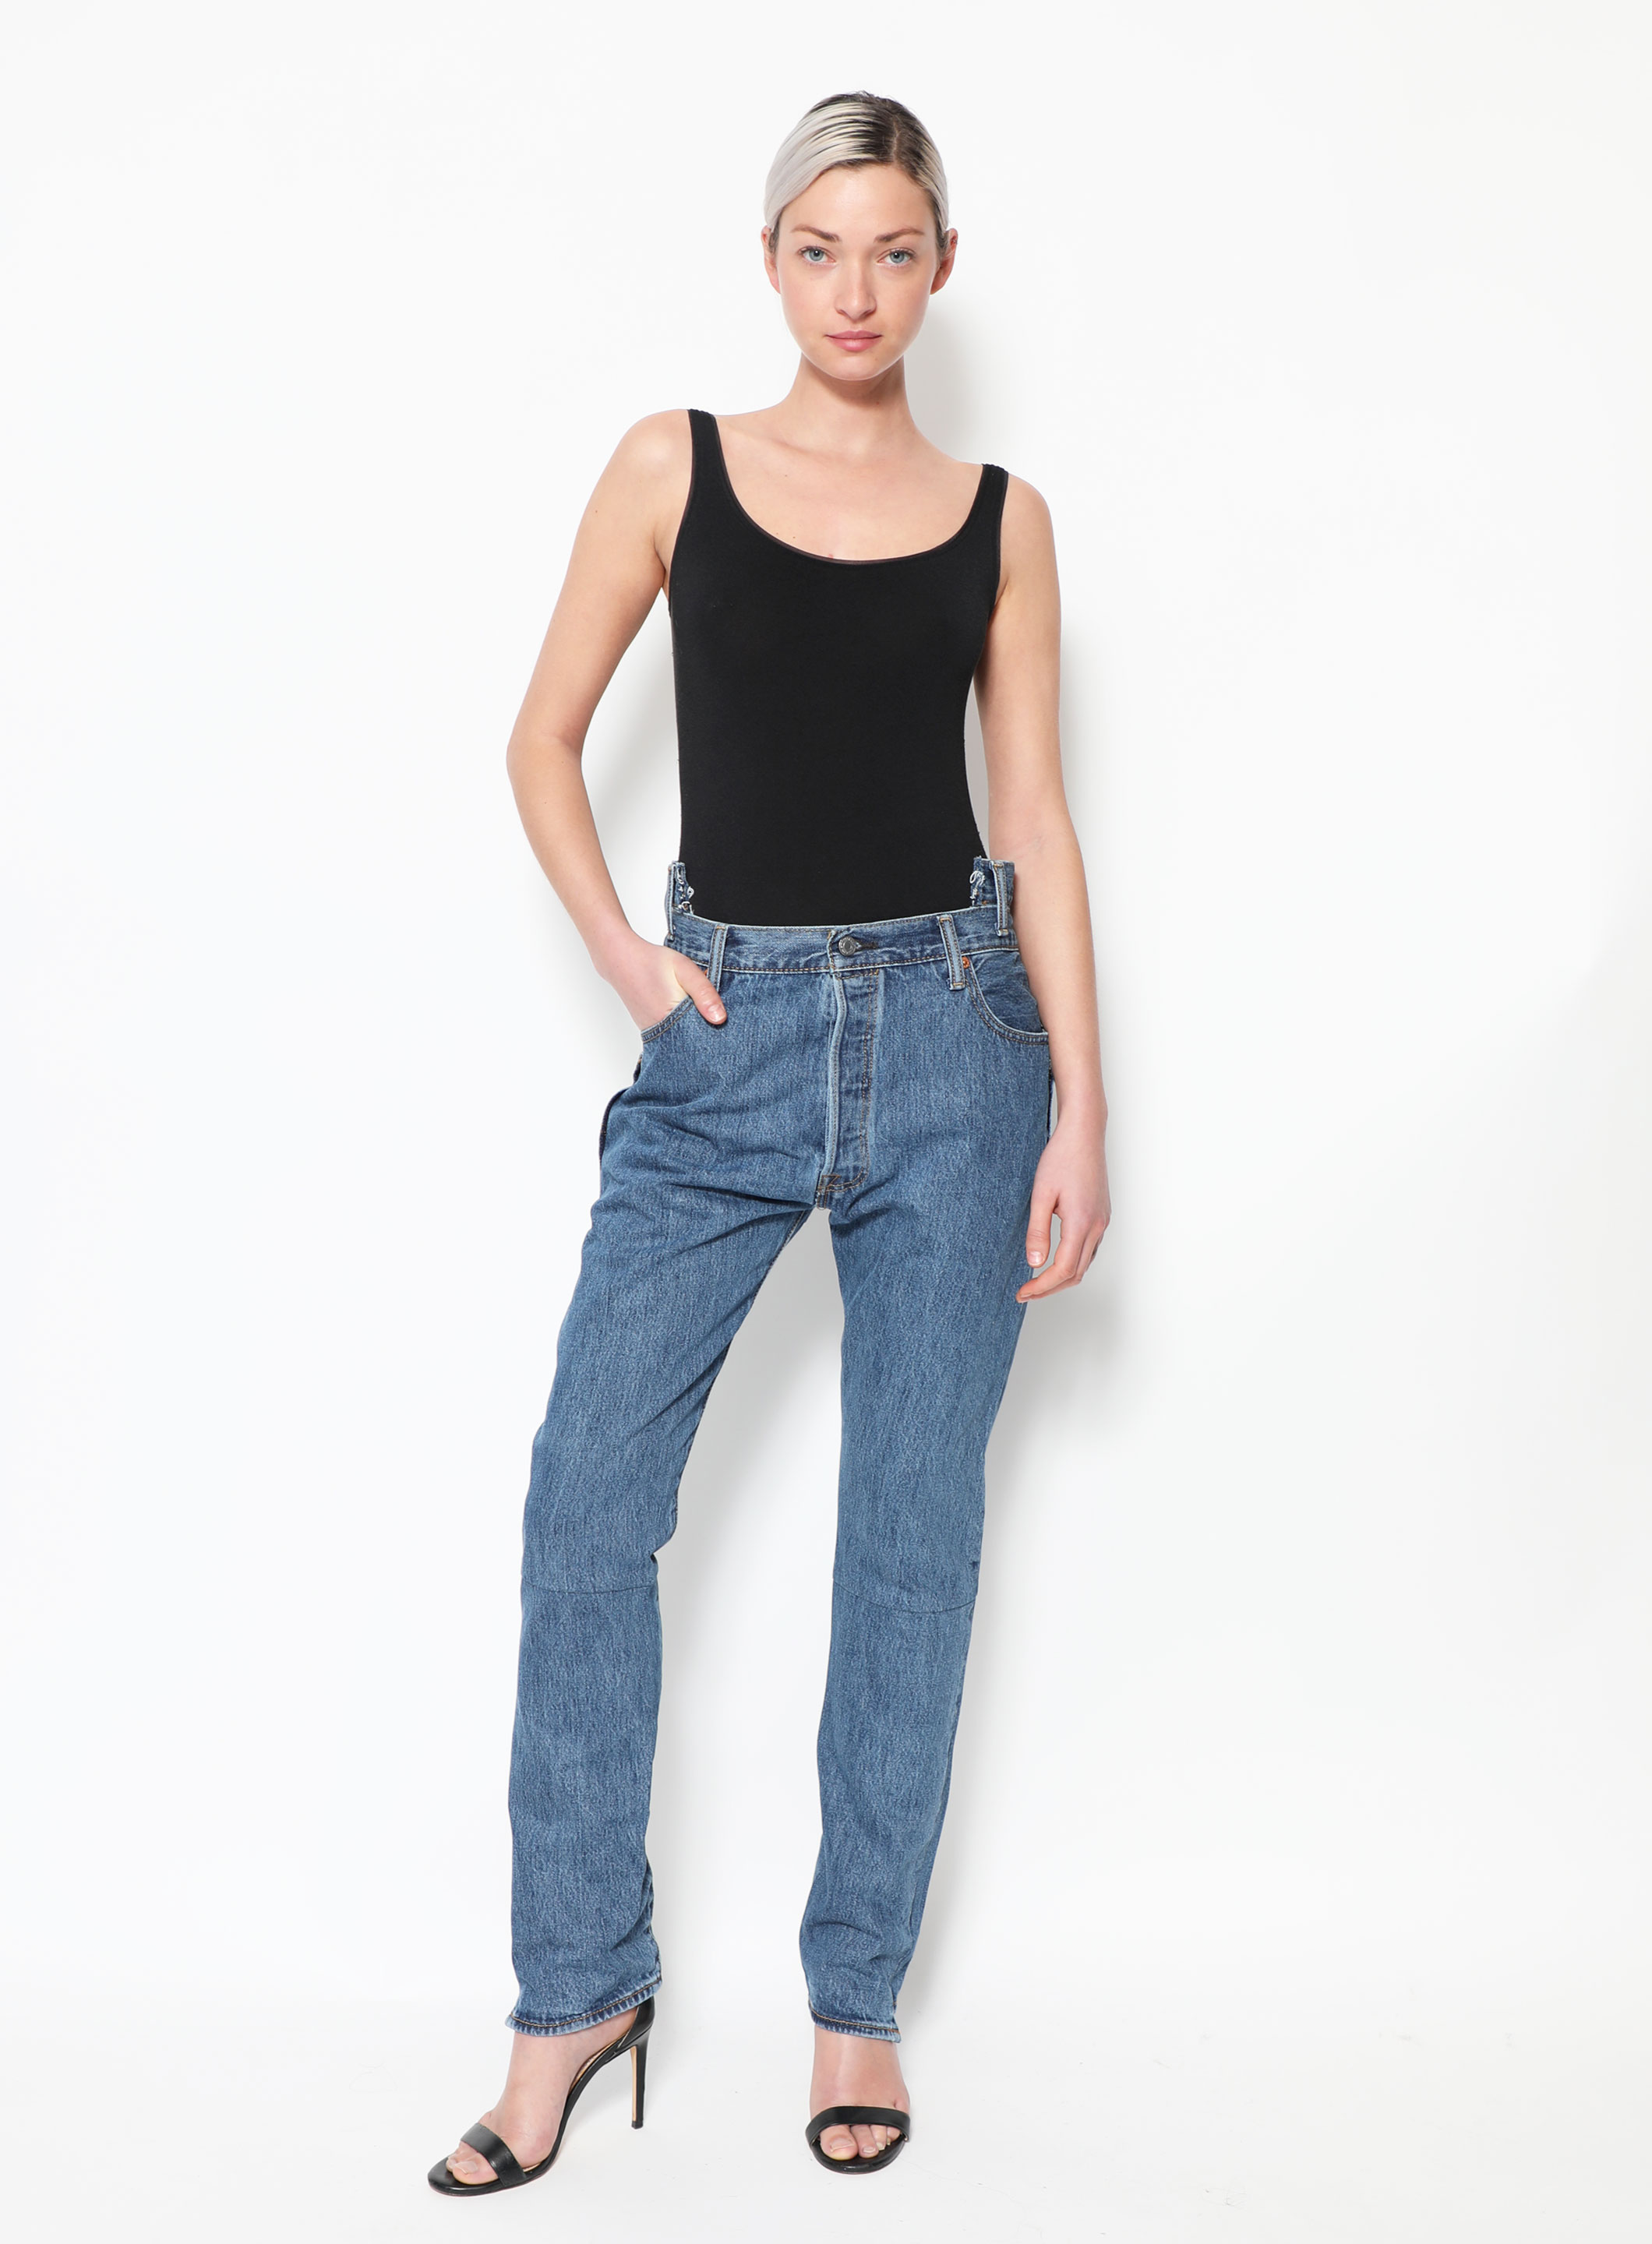 Louis Vuitton - Authenticated Jean - Denim - Jeans Black for Women, Very Good Condition